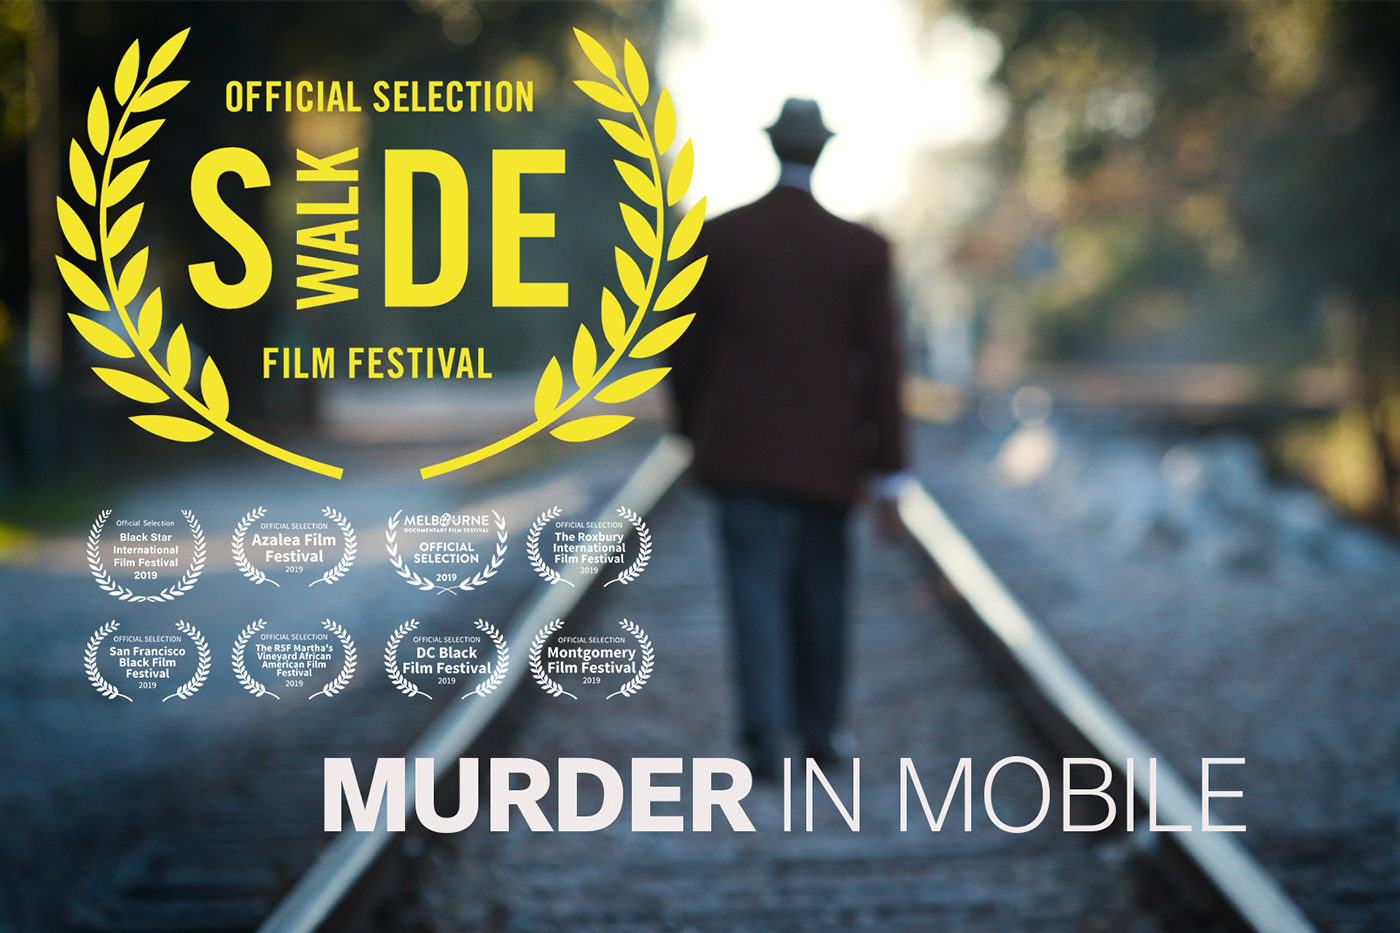 Watch: Murder in Mobile, a documentary short film